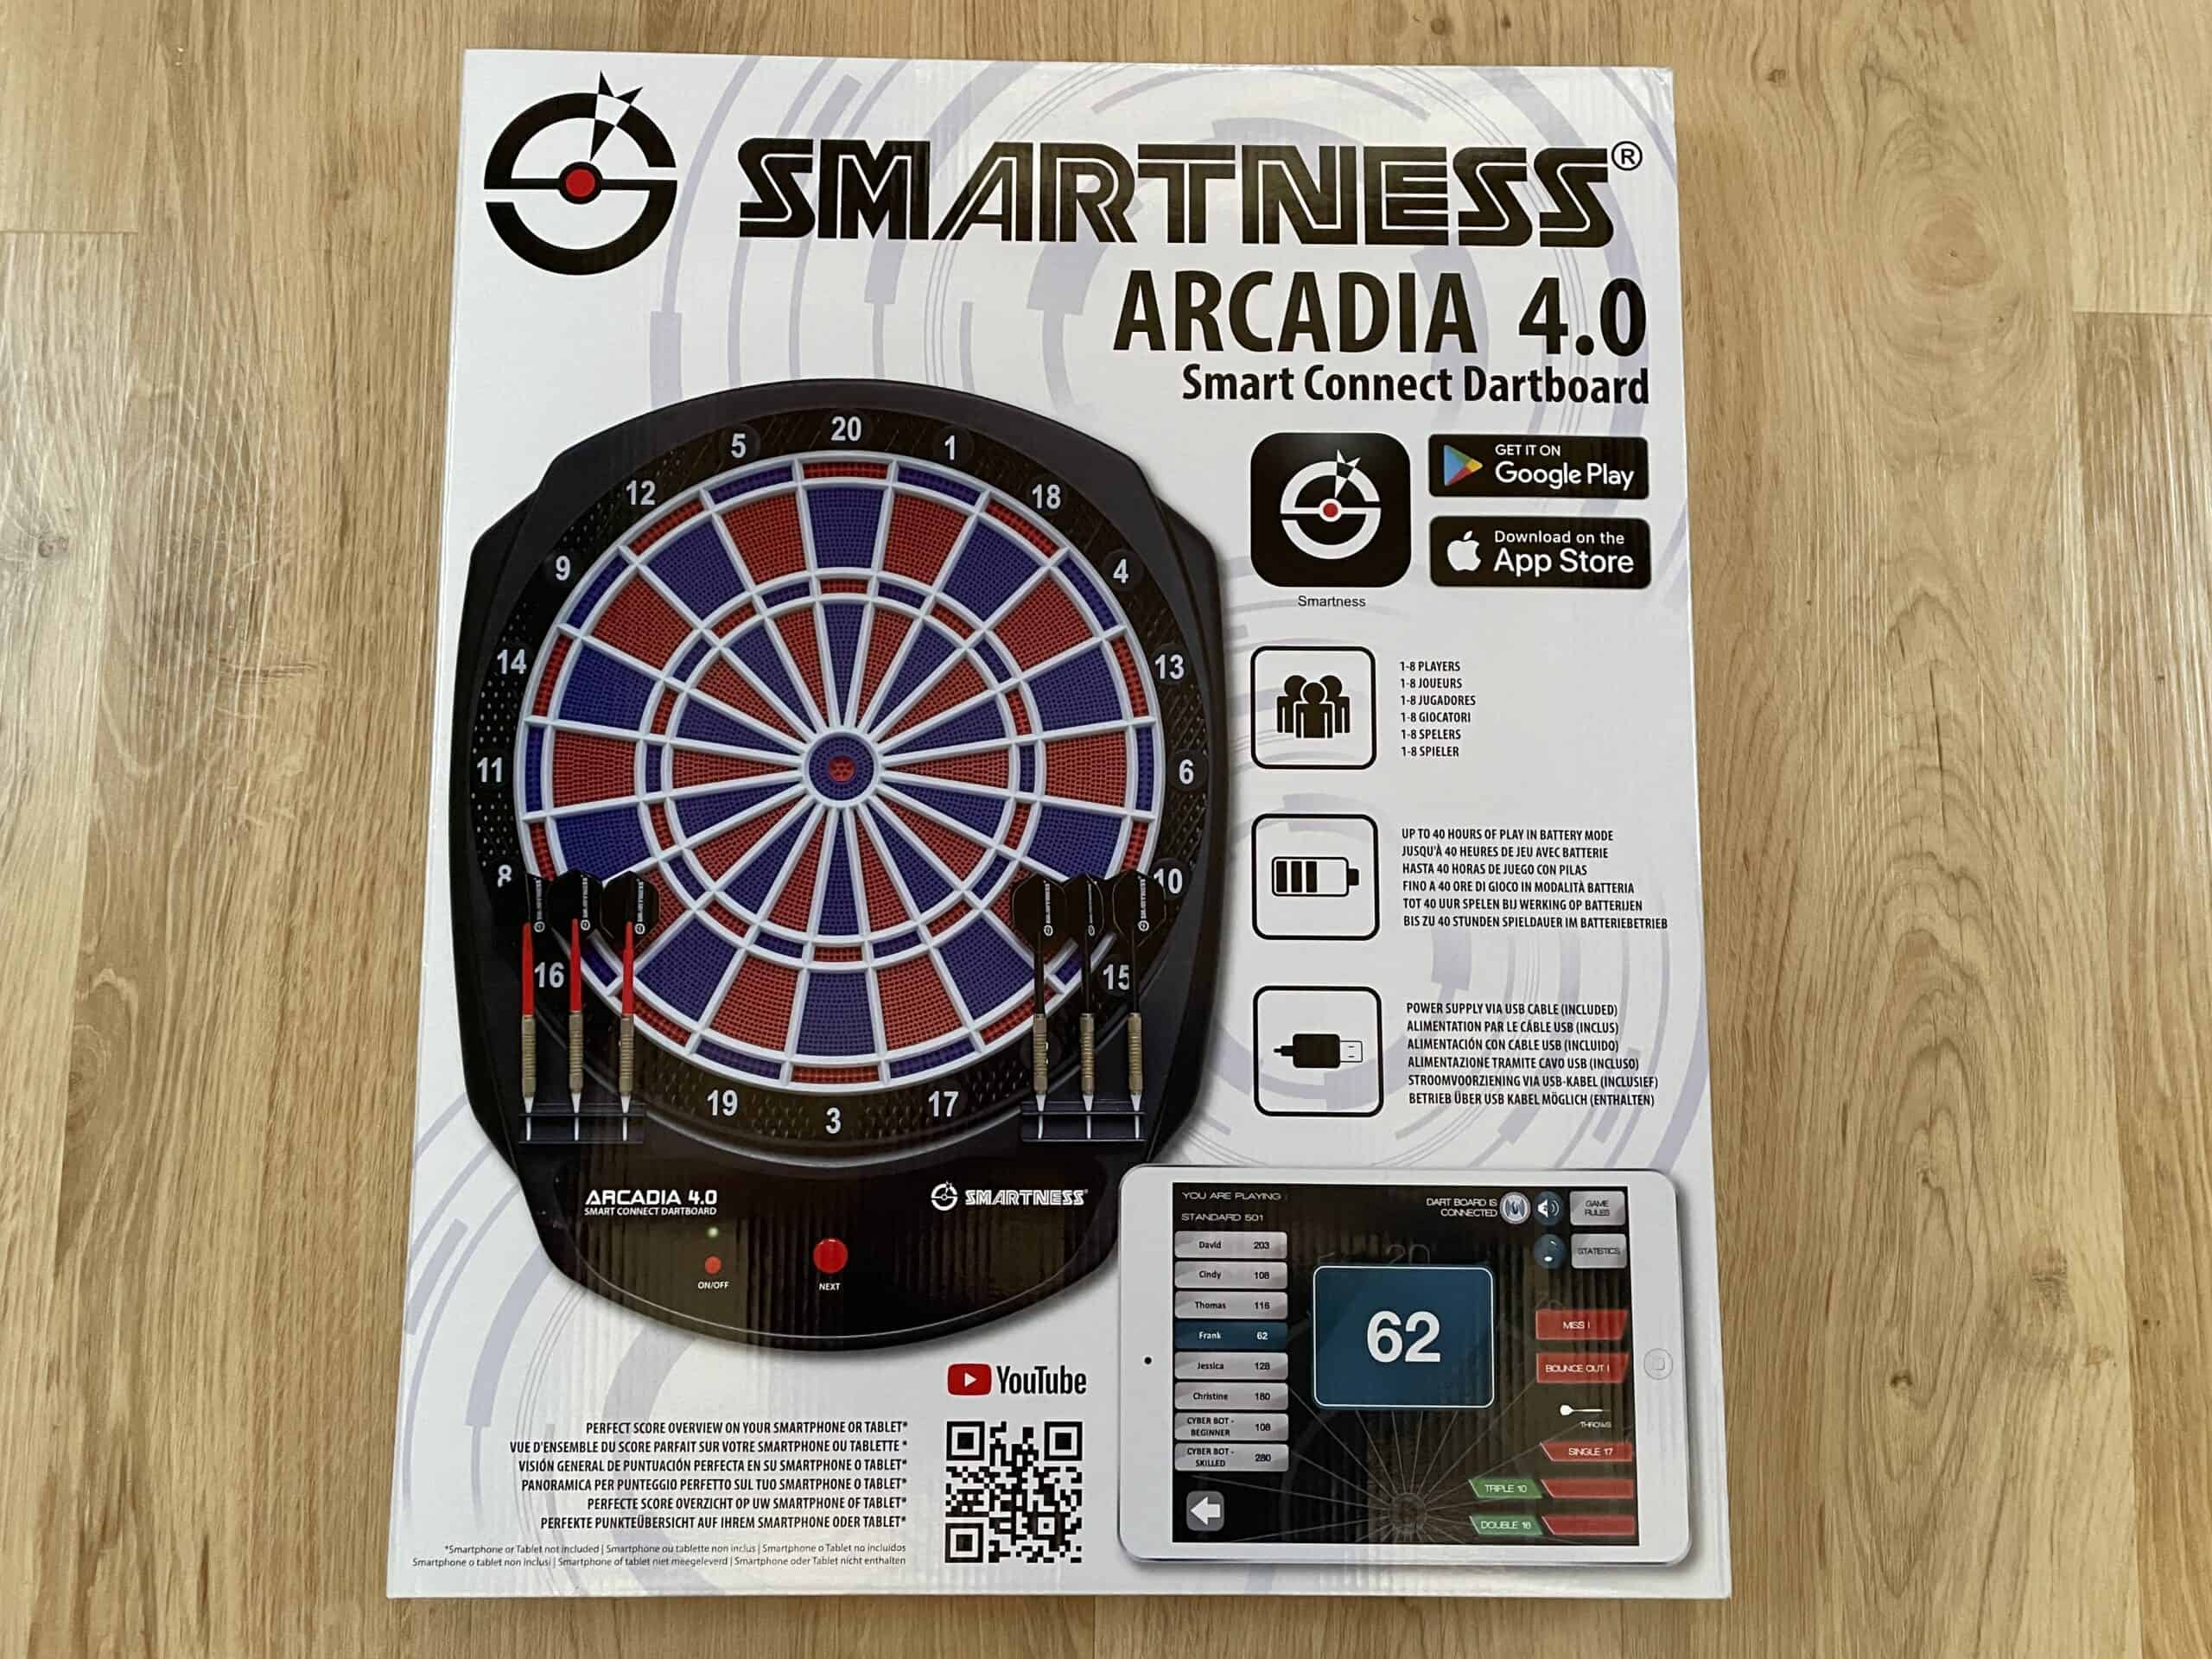 Smarte Dartscheibe - Carromco Smart Connect E-Dartboard Arcadia 4.0 im Test  | iQhaus.de - Dein Smart Home Magazin